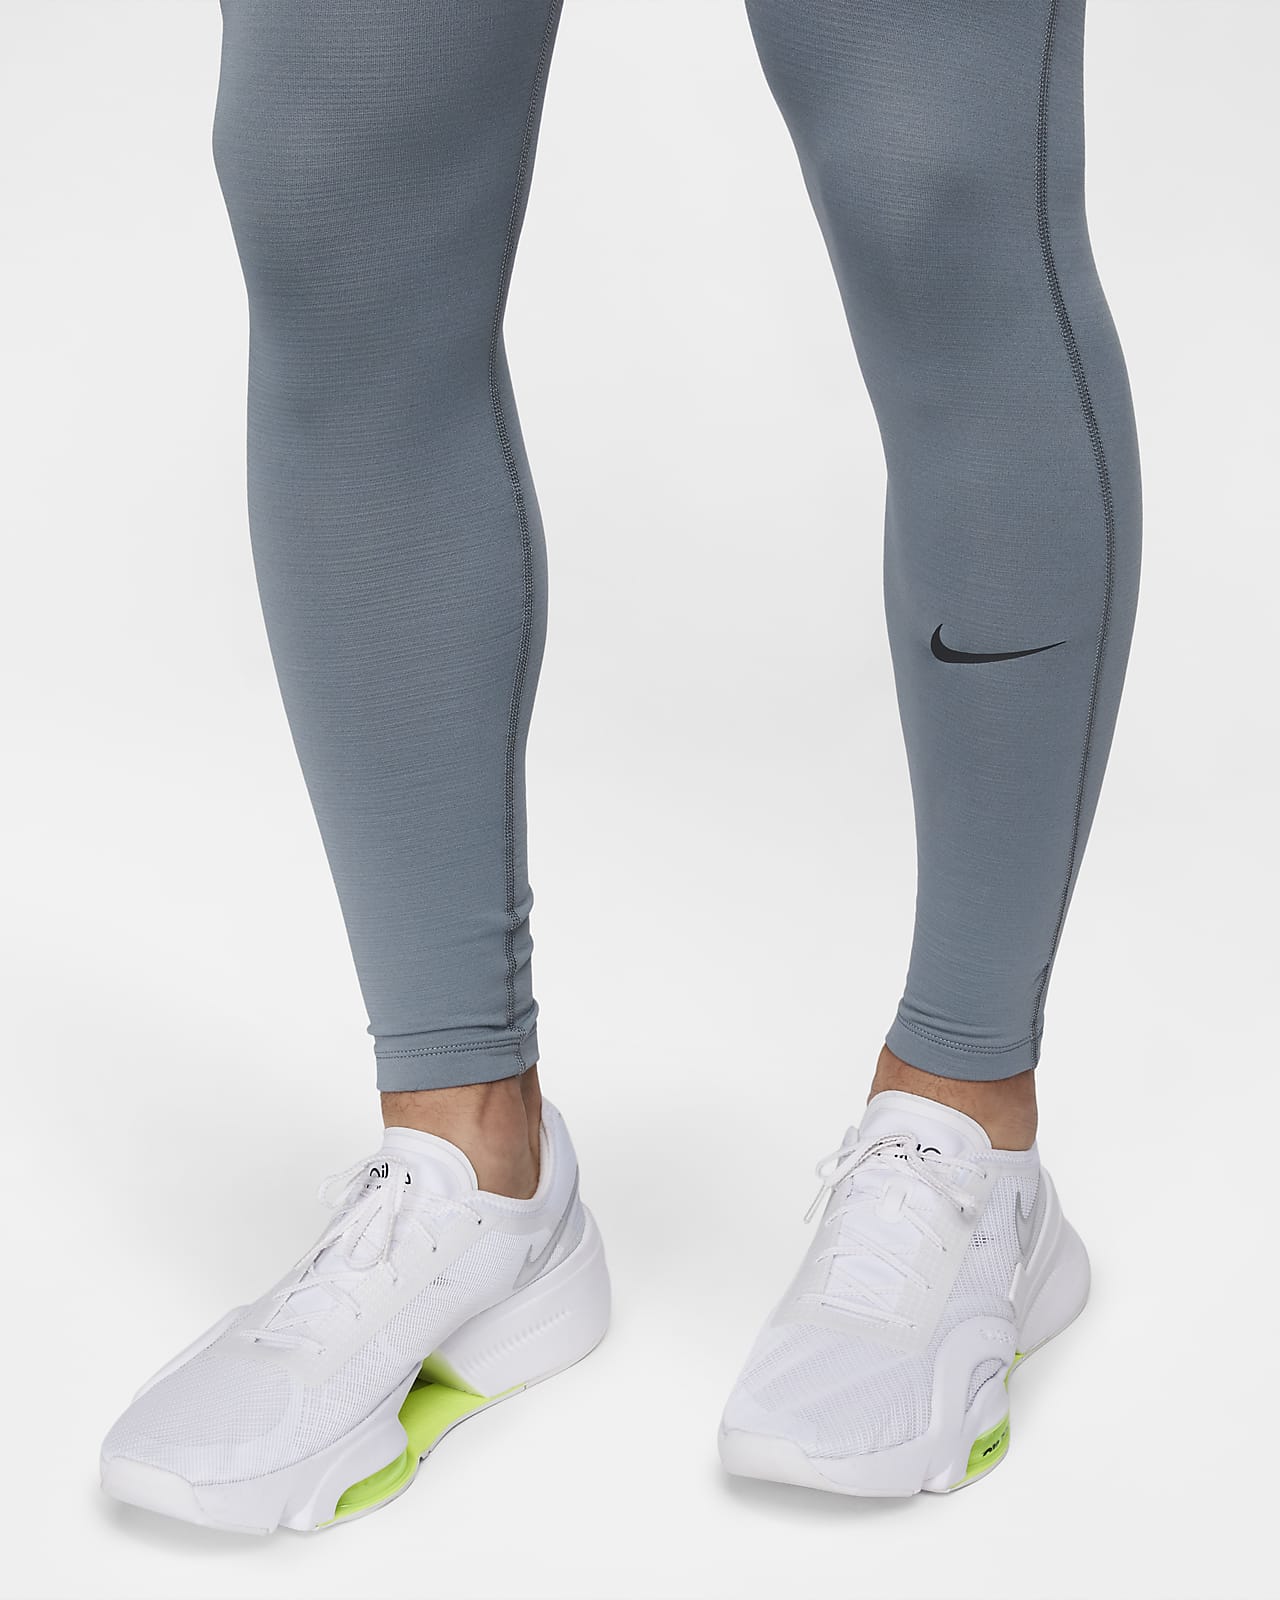 Nike Pro Warm Men's Tights